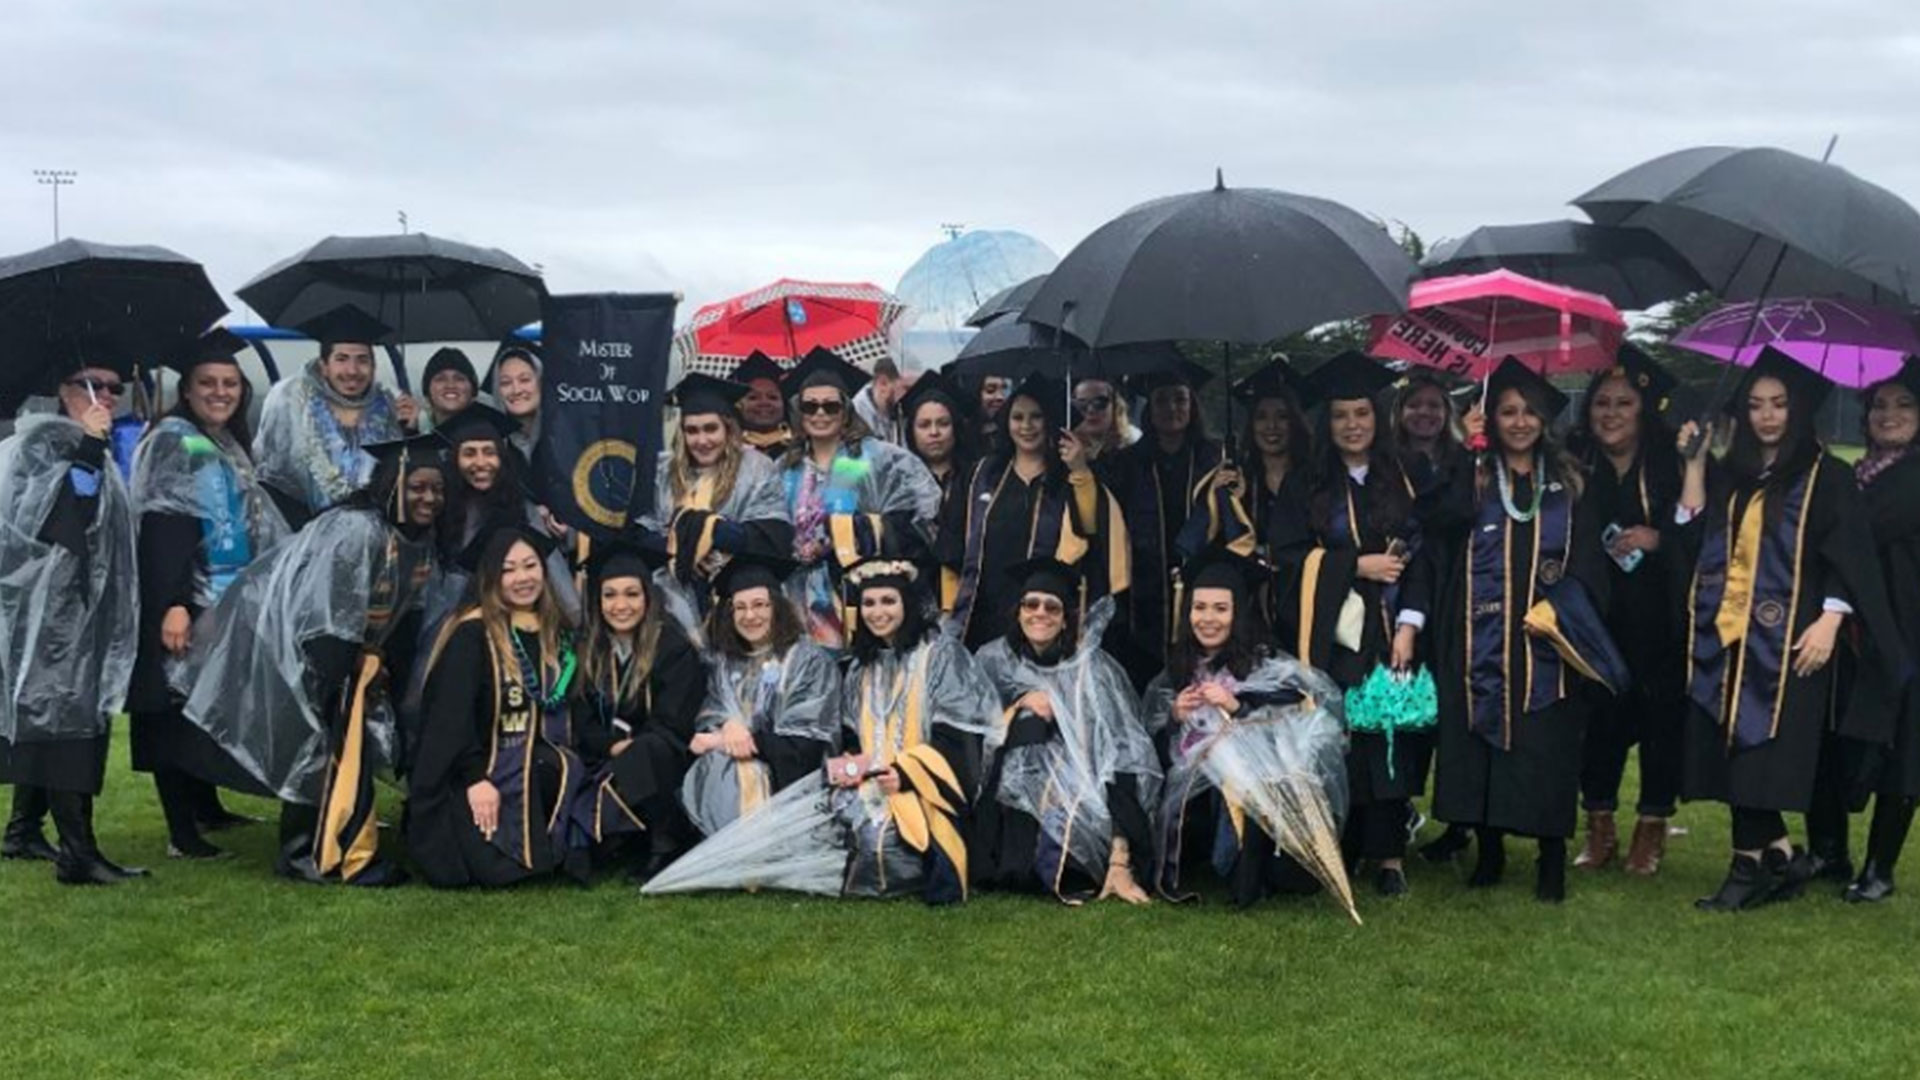 Photo: Social work graduates in the rain